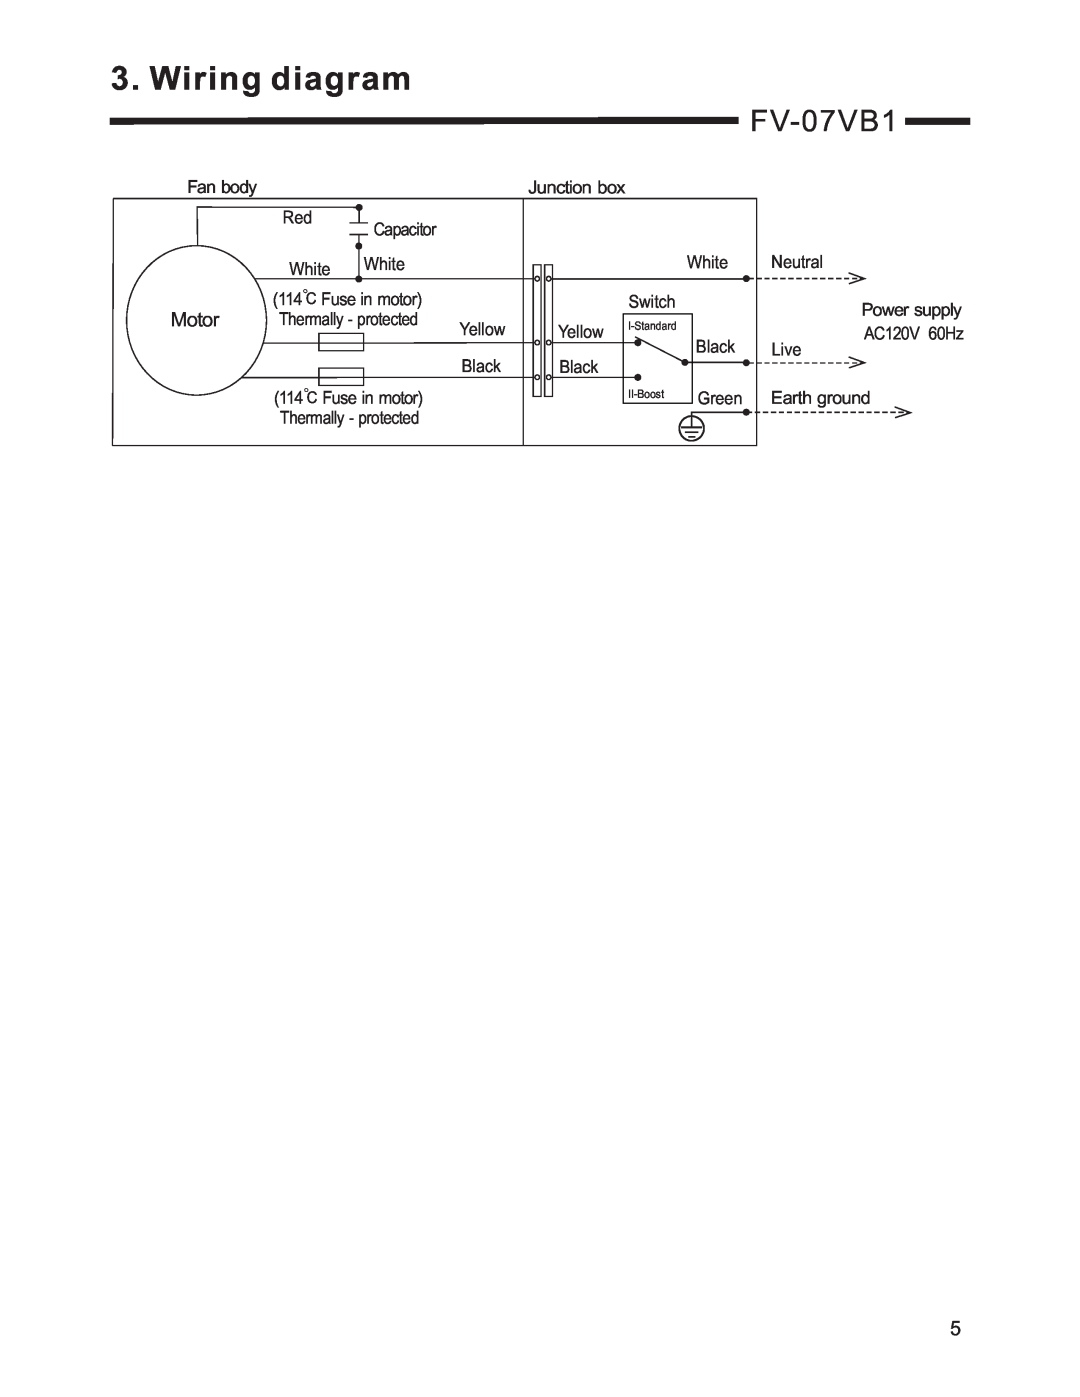 Panasonic FV-07VB1 service manual Wiring diagram, Motor 